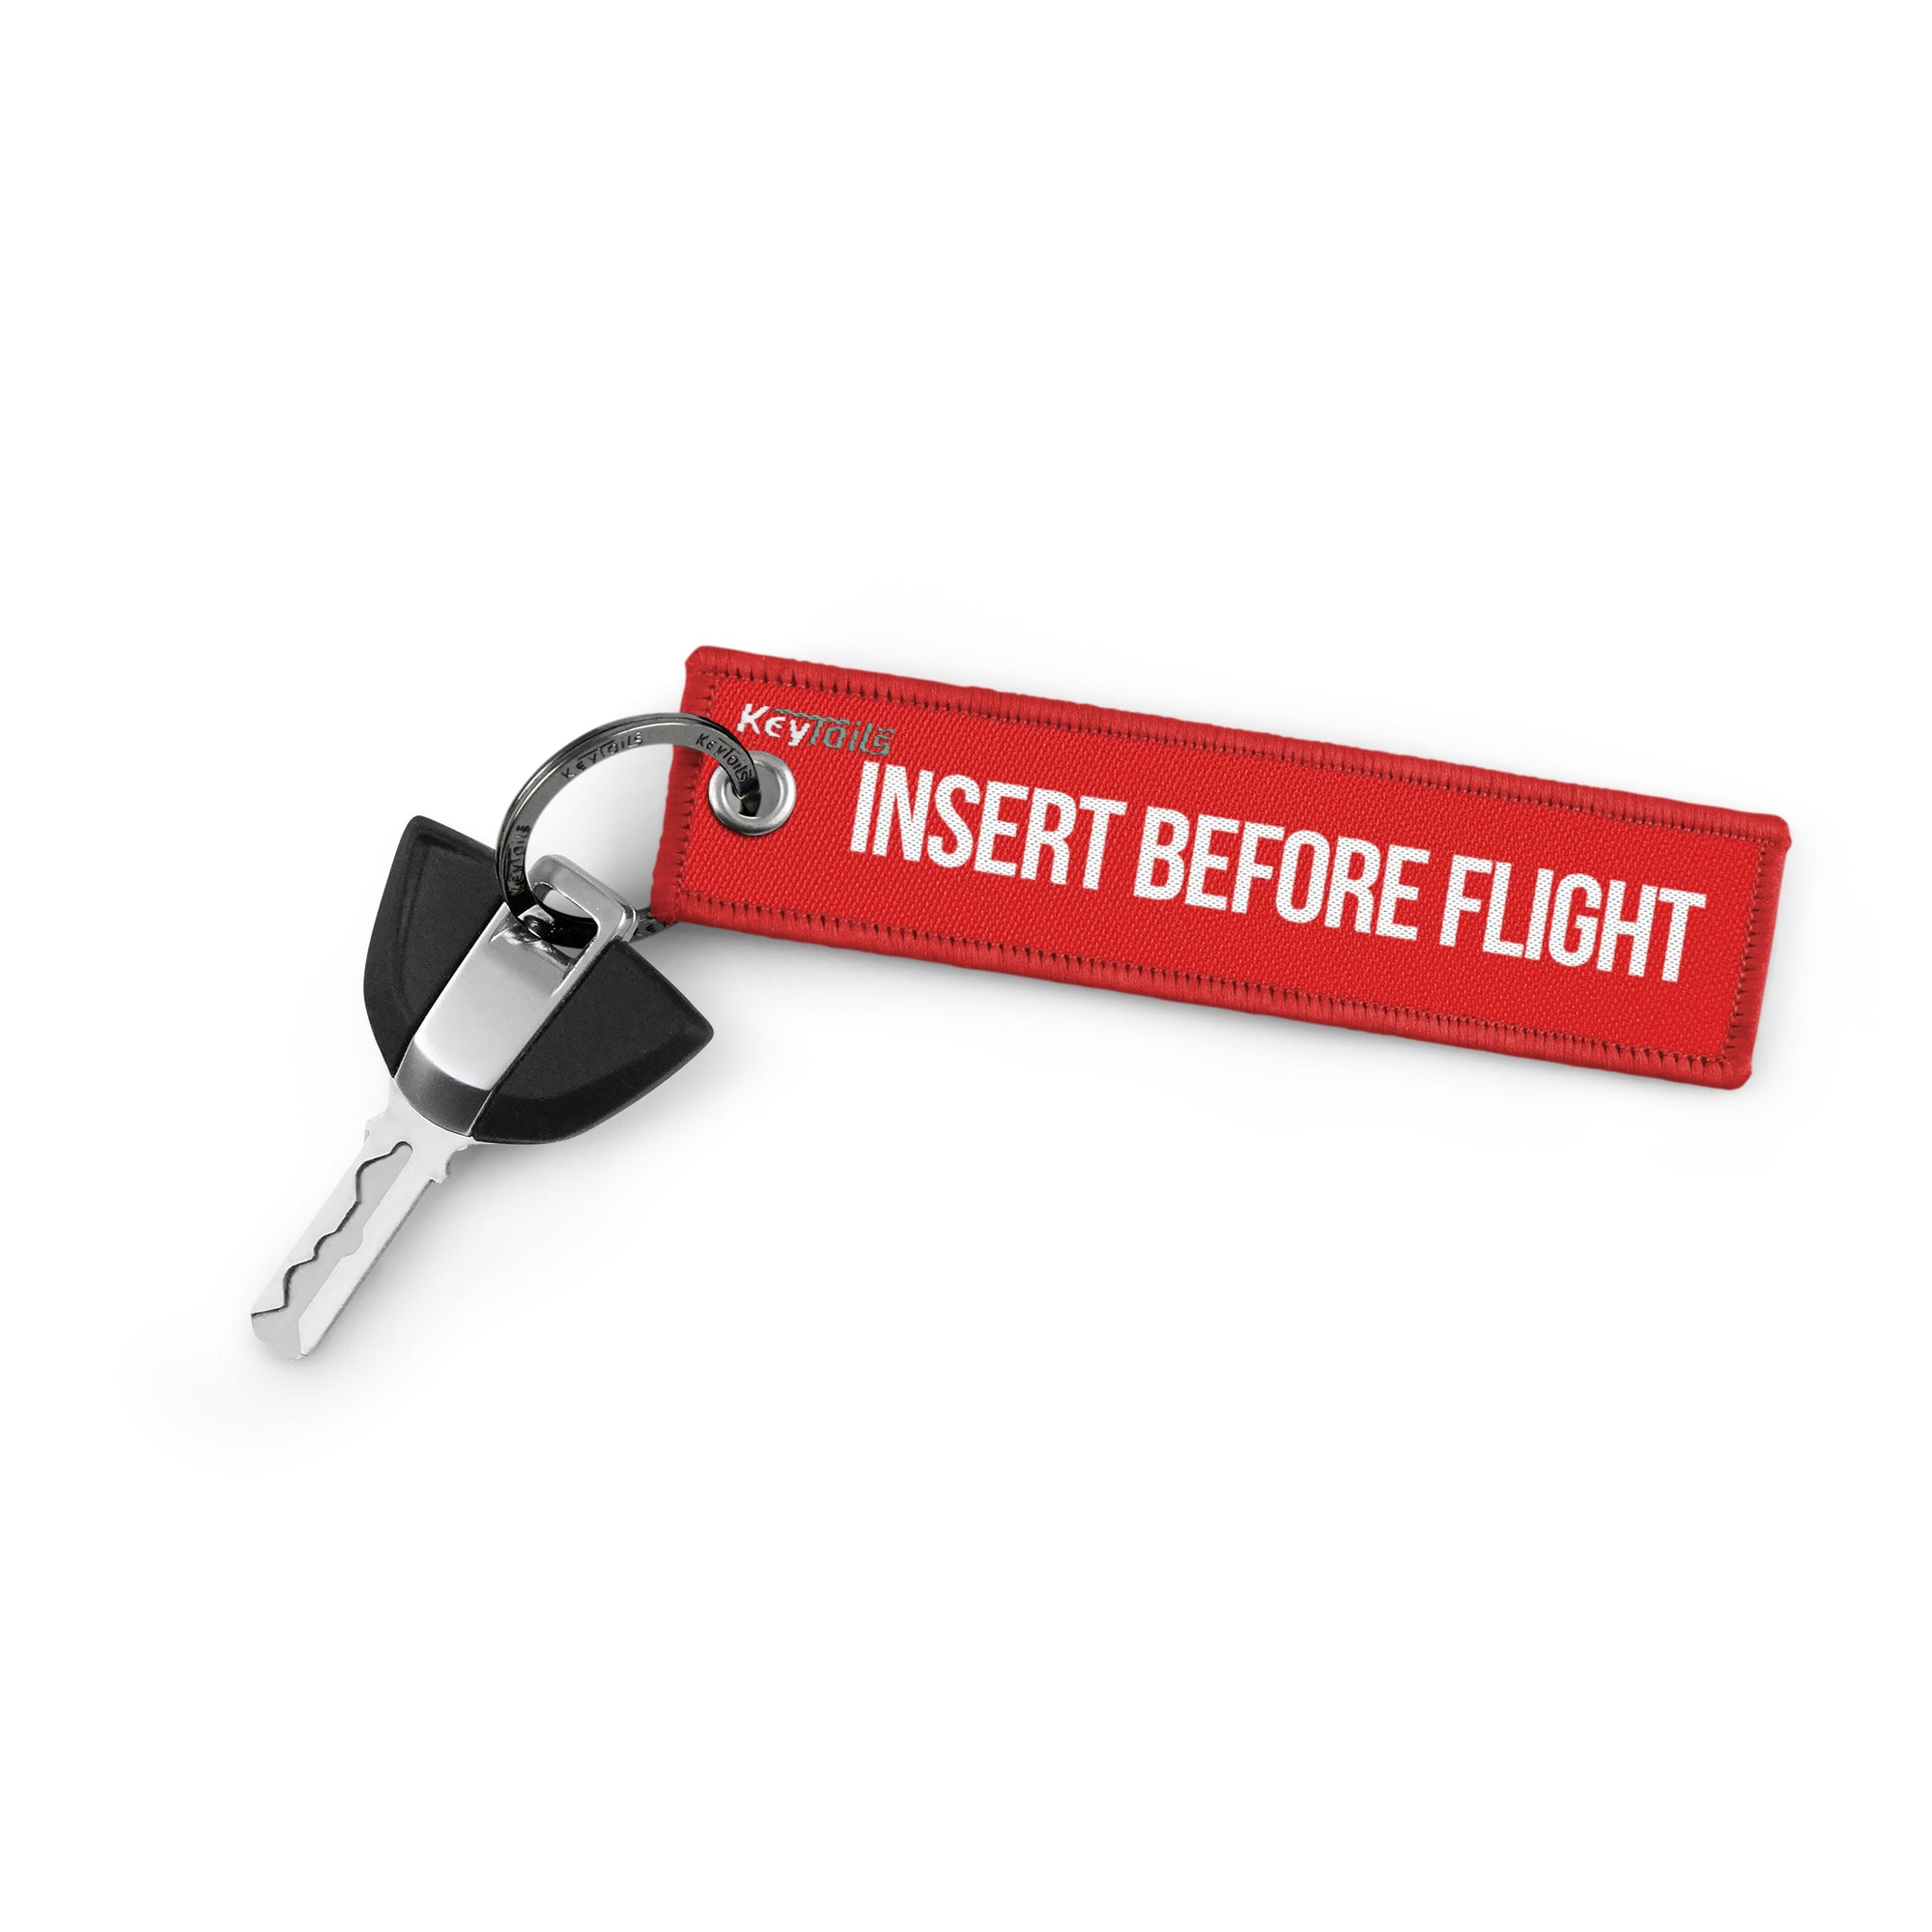 Insert Before Flight Keychain, Key Tag - Insert Before Flight